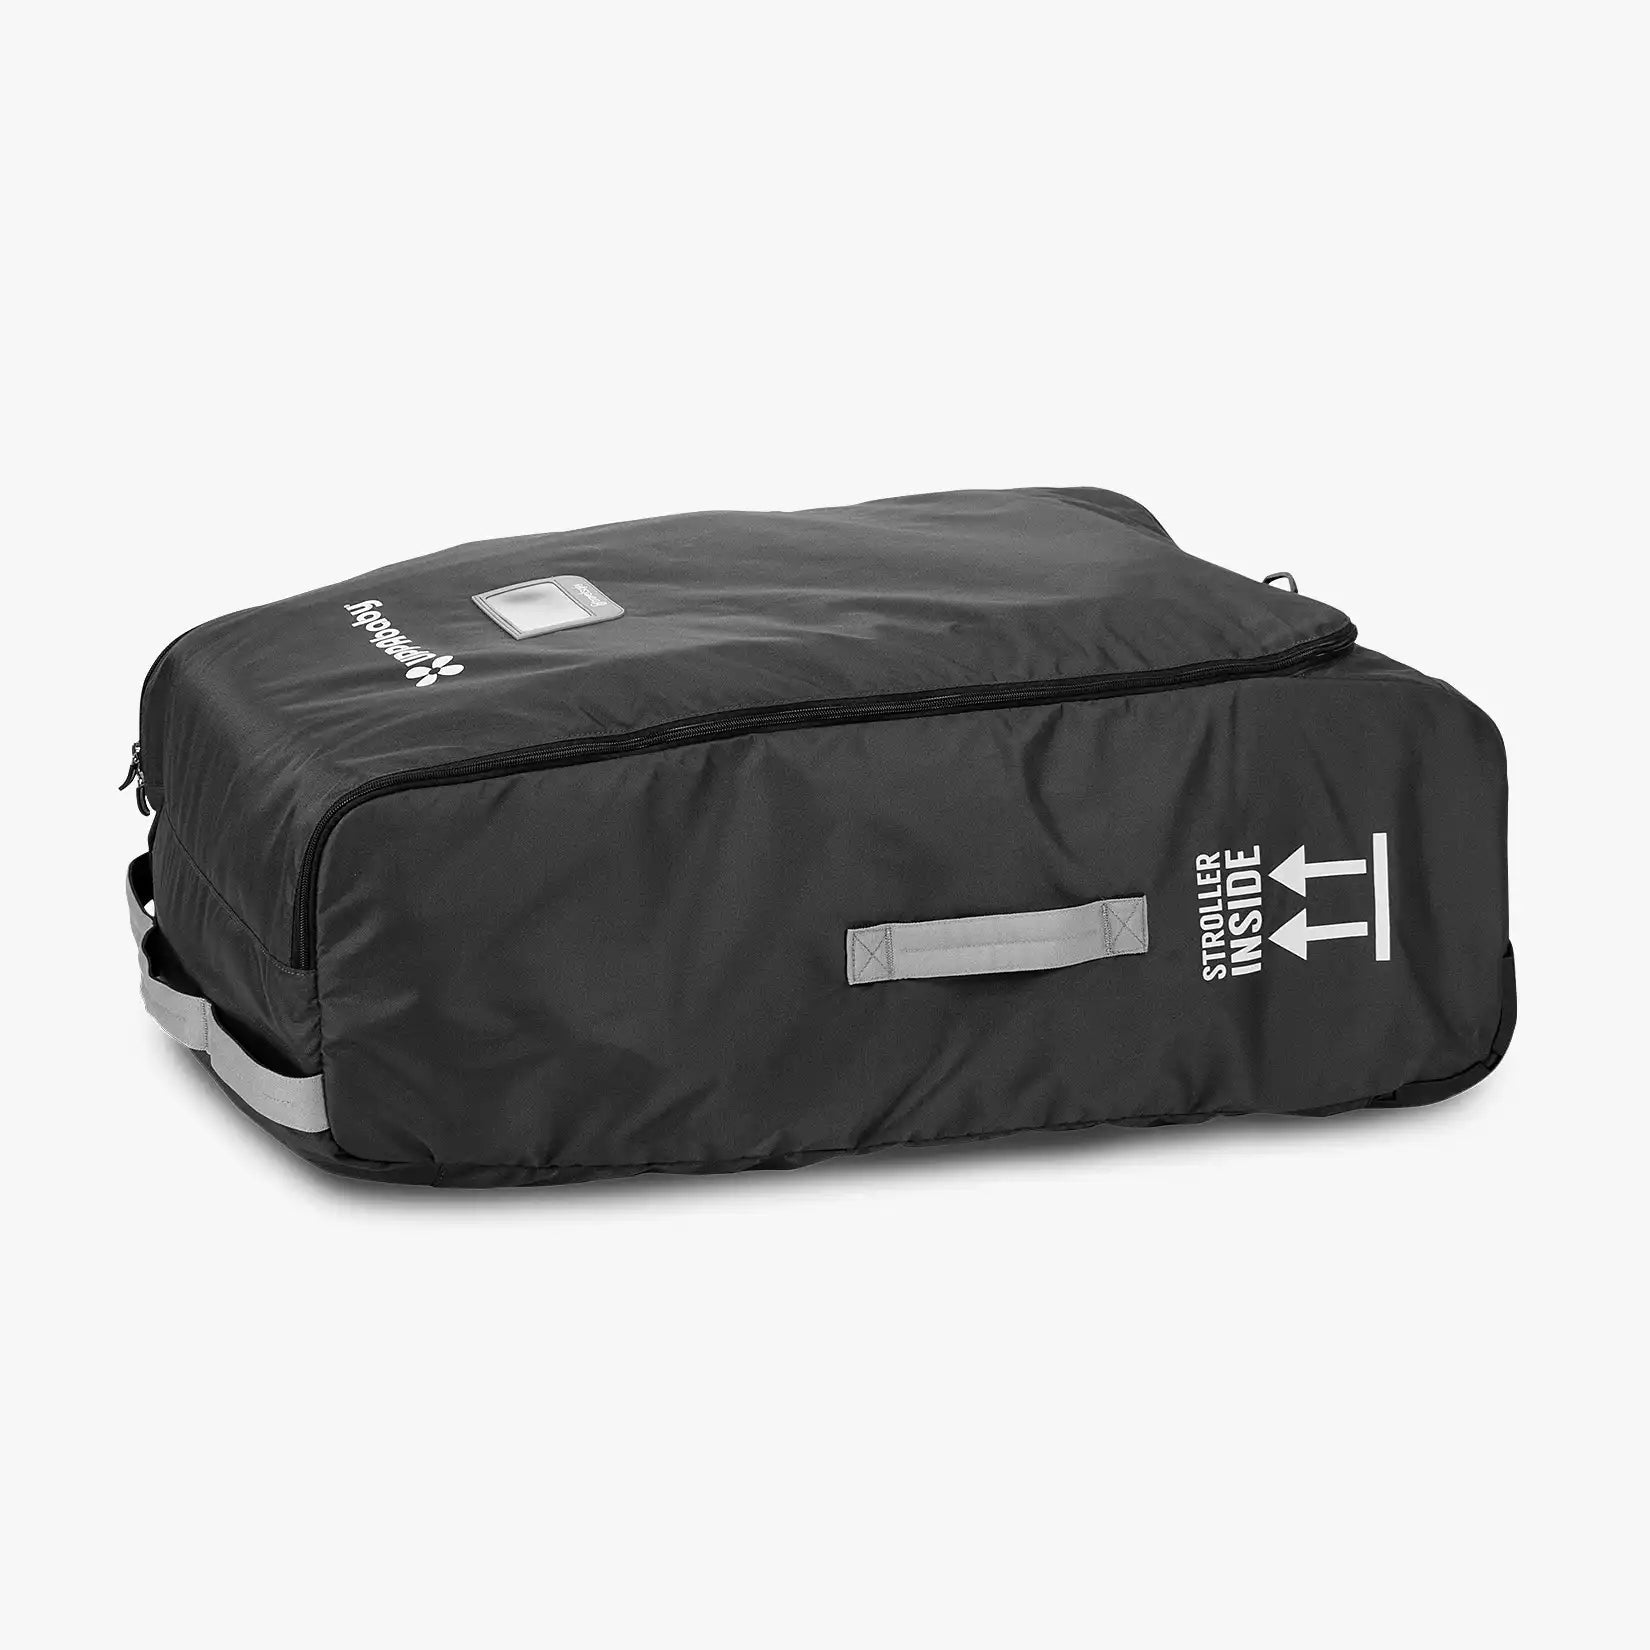 UPPAbaby Travel Bag for VISTA, VISTA V2, CRUZ, and CRUZ V2 Strollers, -- ANB Baby